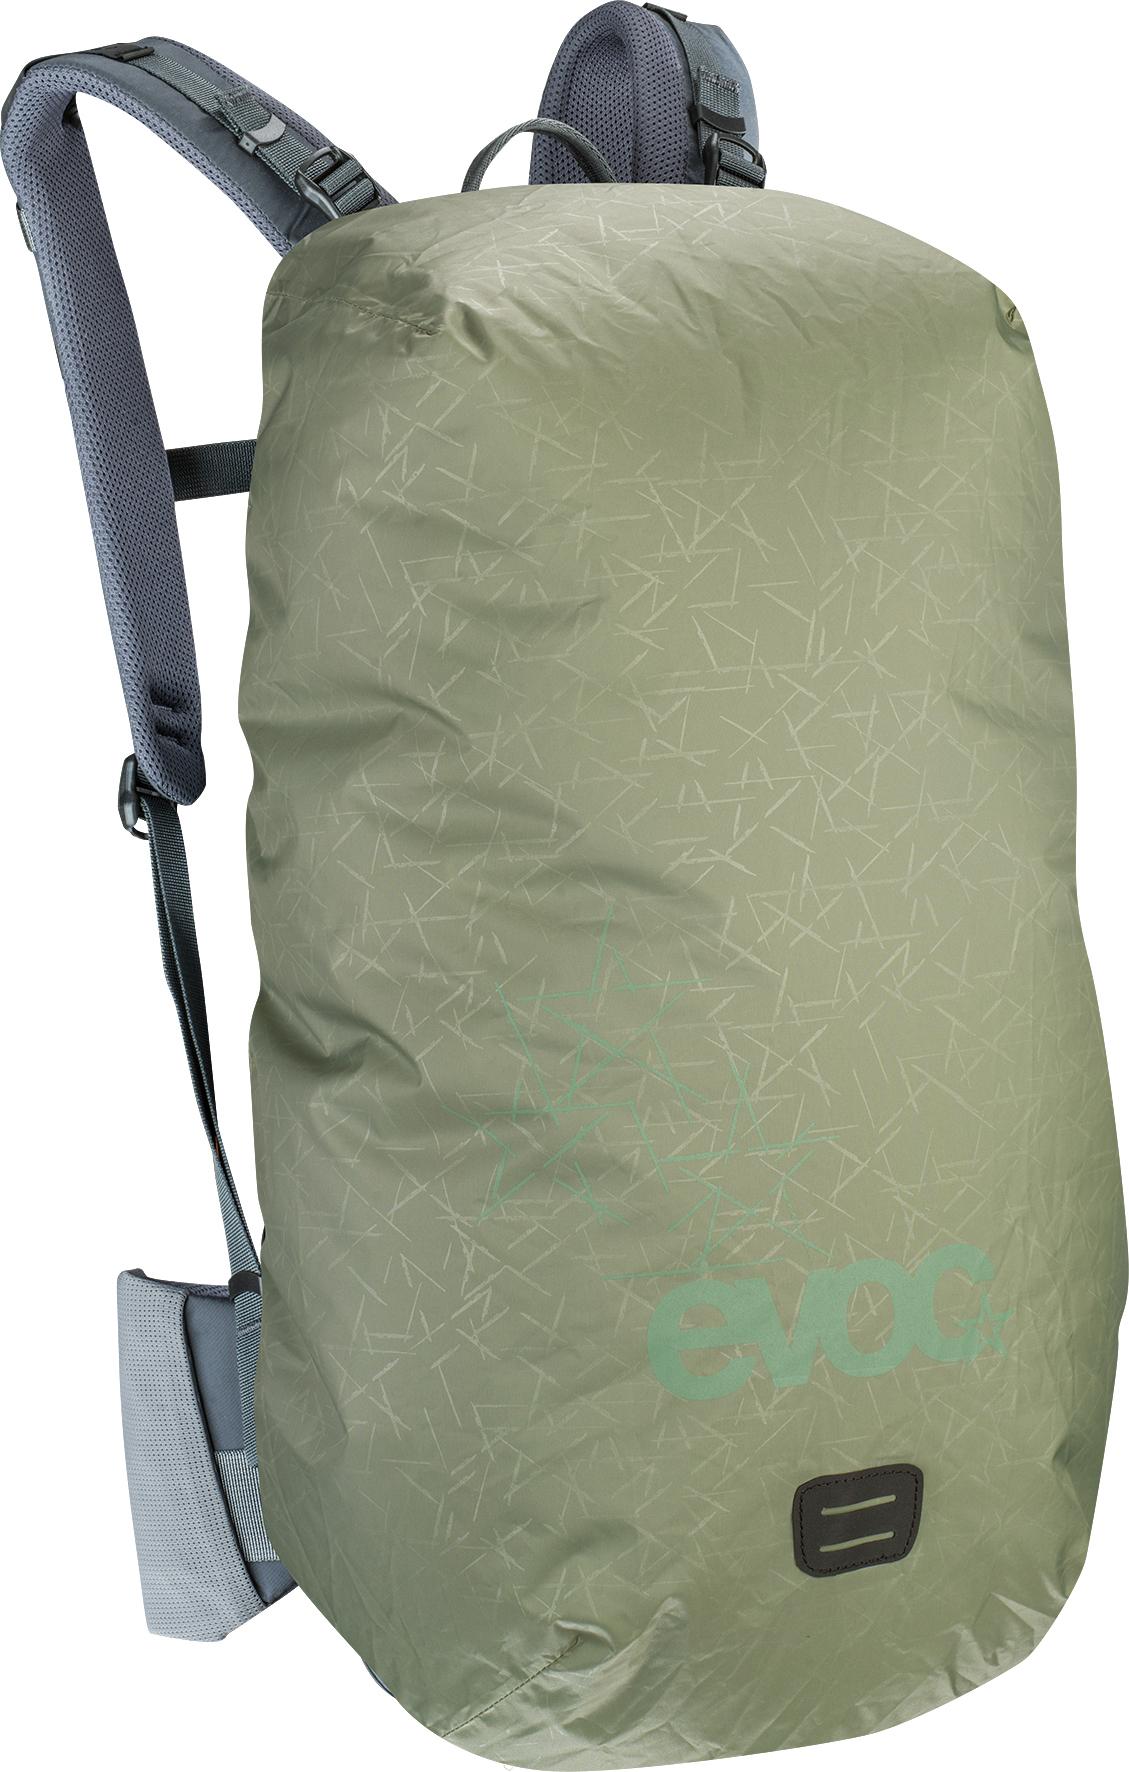 Evoc Raincover Backpack Sleeve - Large - Light Olive